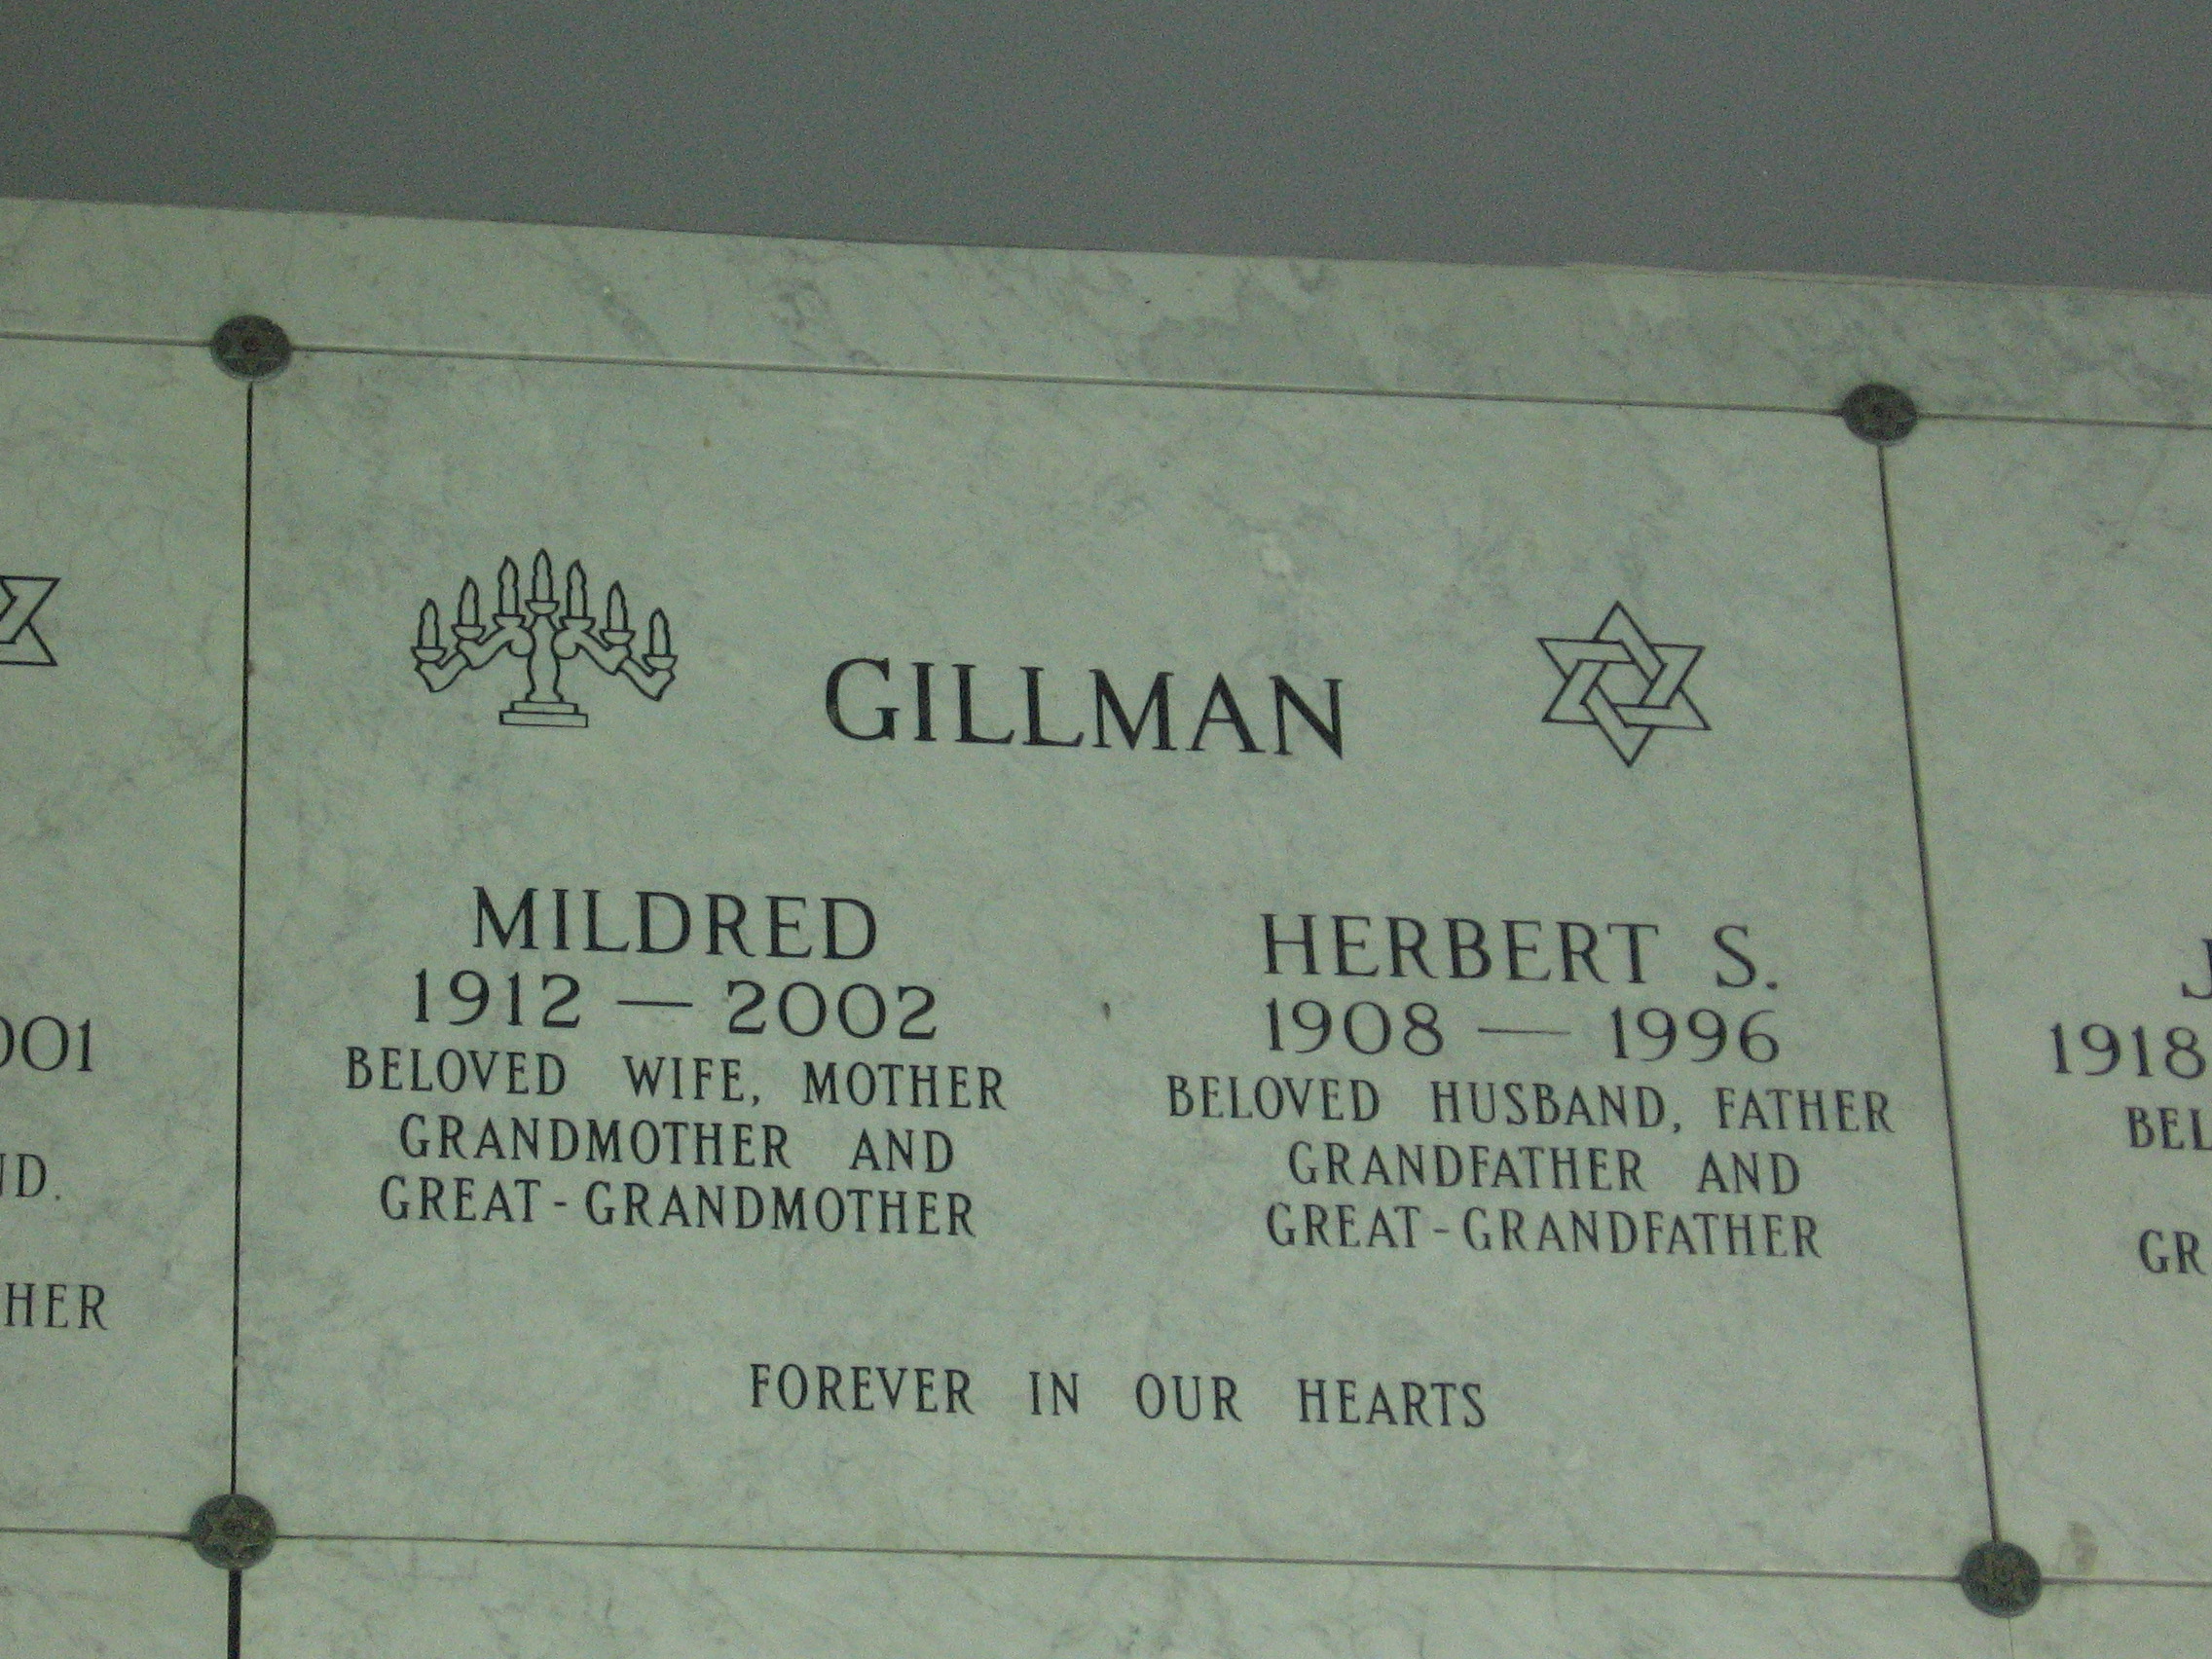 Mildred Gillman